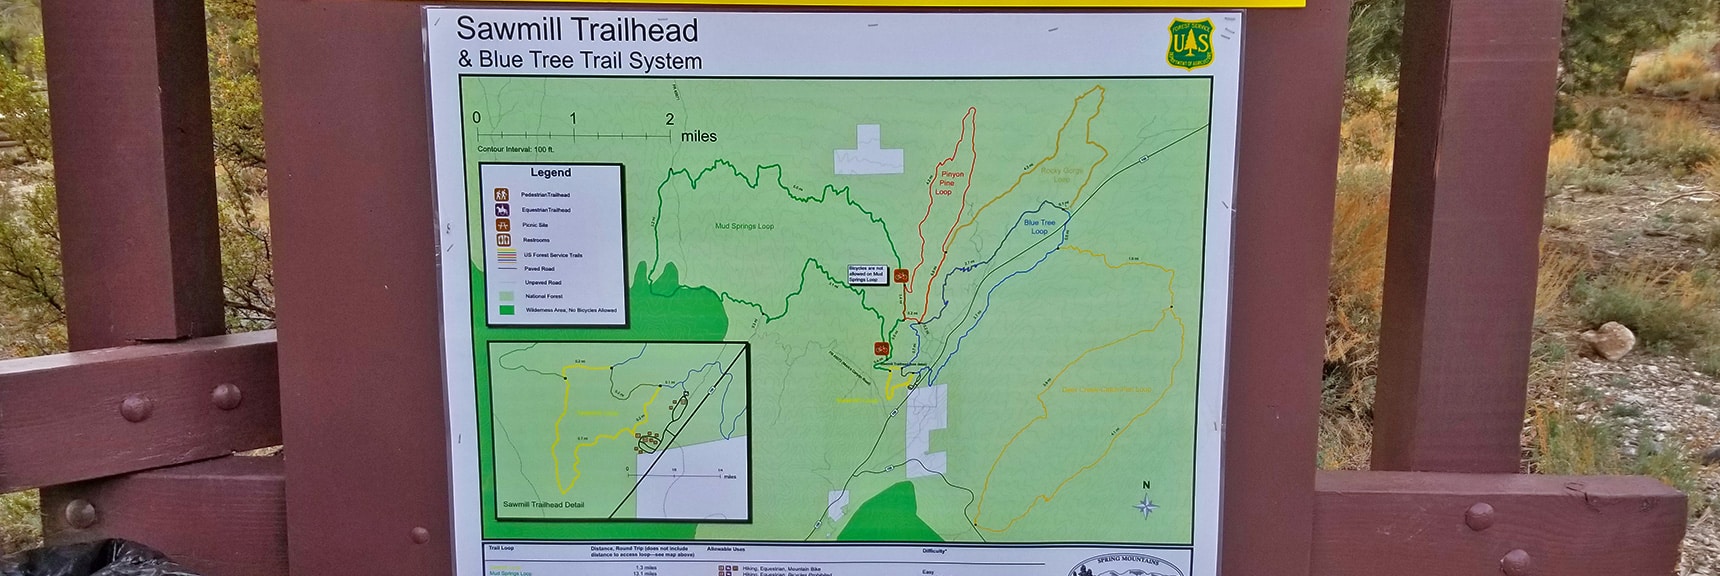 Sawmill Trailhead Trail System Display Map: Mud Springs, Pinyon Pine, Blue Tree, Rocky Gorge & Deer Creek Loops| Sawmill Trail to McFarland Peak | Spring Mountains, Nevada